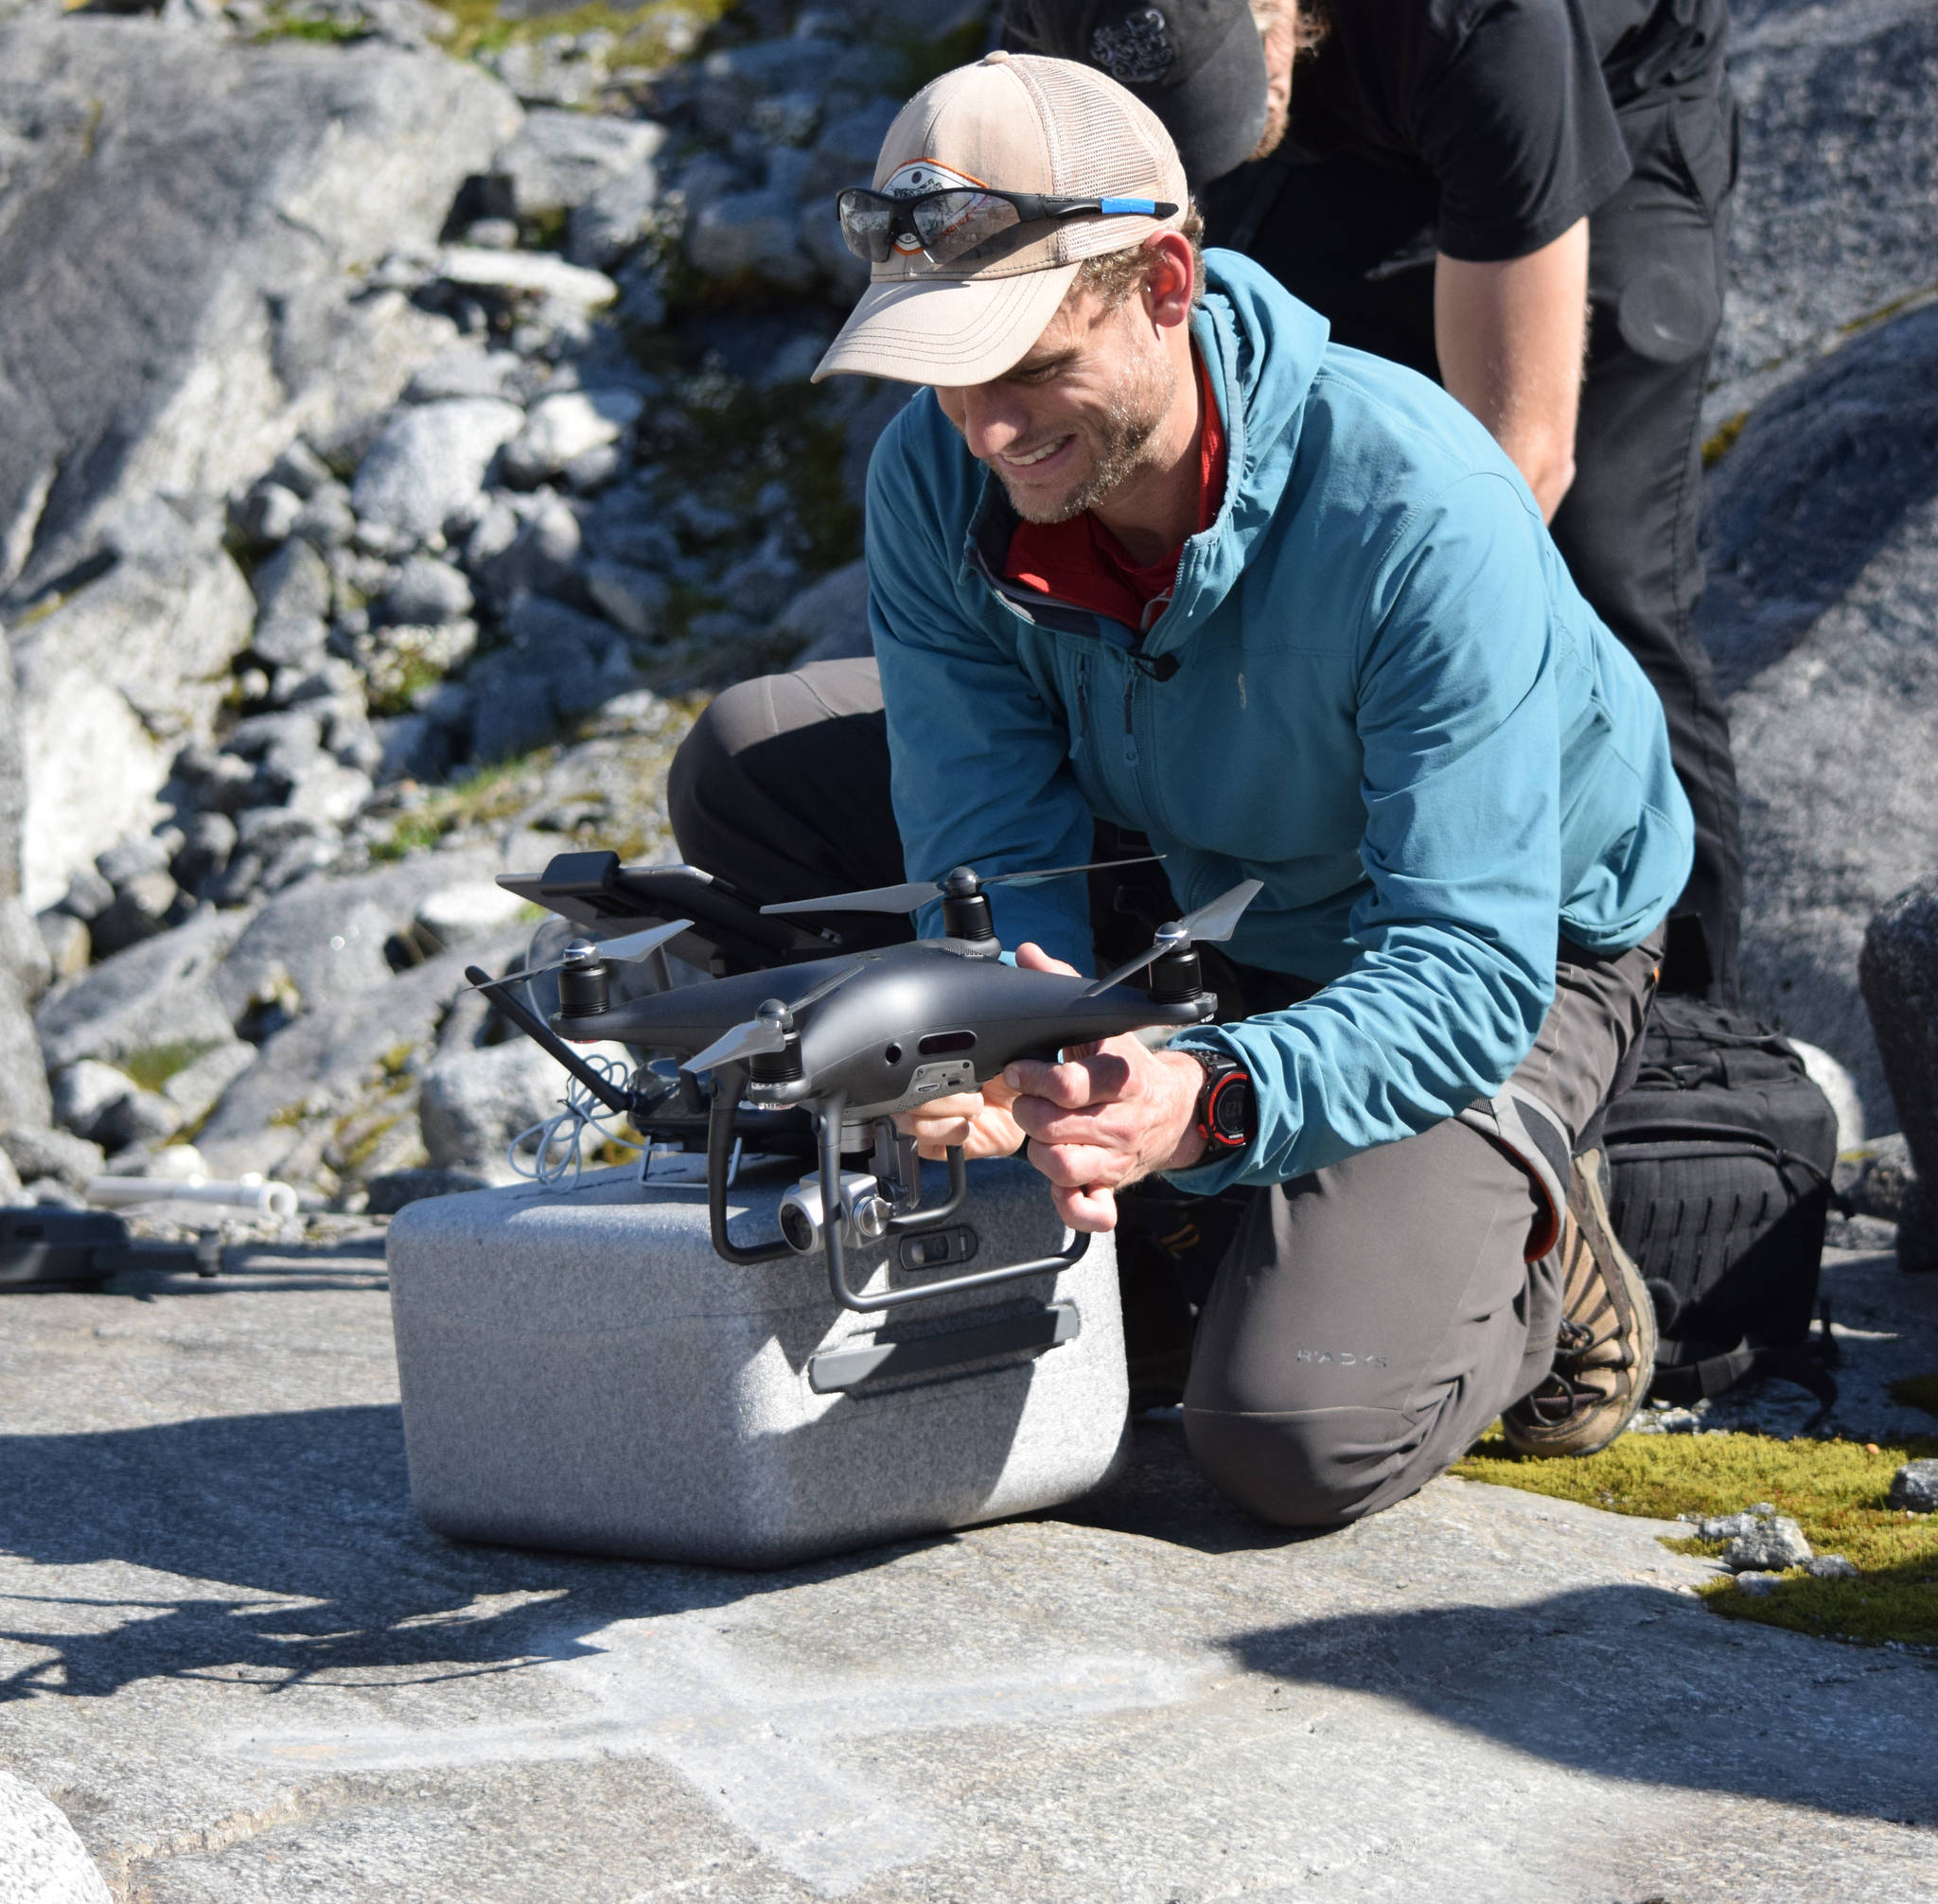 University of Alaska Southeast professor of environmental science Christian Kienholz gets his drone ready for flight on a rock outcrop near Suicide Basin on Friday, June 21, 2019. (Nolin Ainsworth | Juneau Empire)